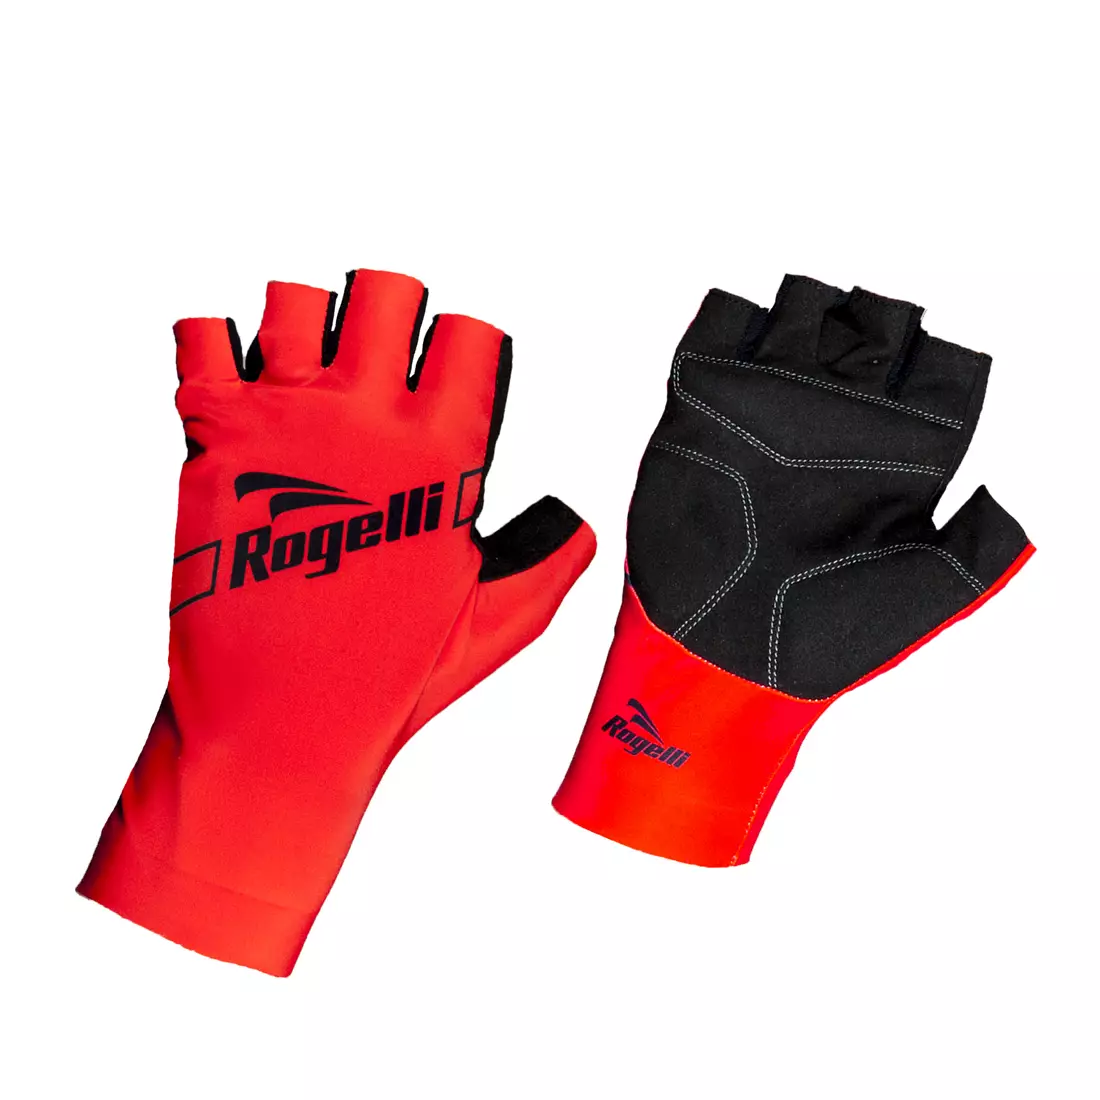 ROGELLI BIKE LOGAN 006.344 men's cycling gloves, red